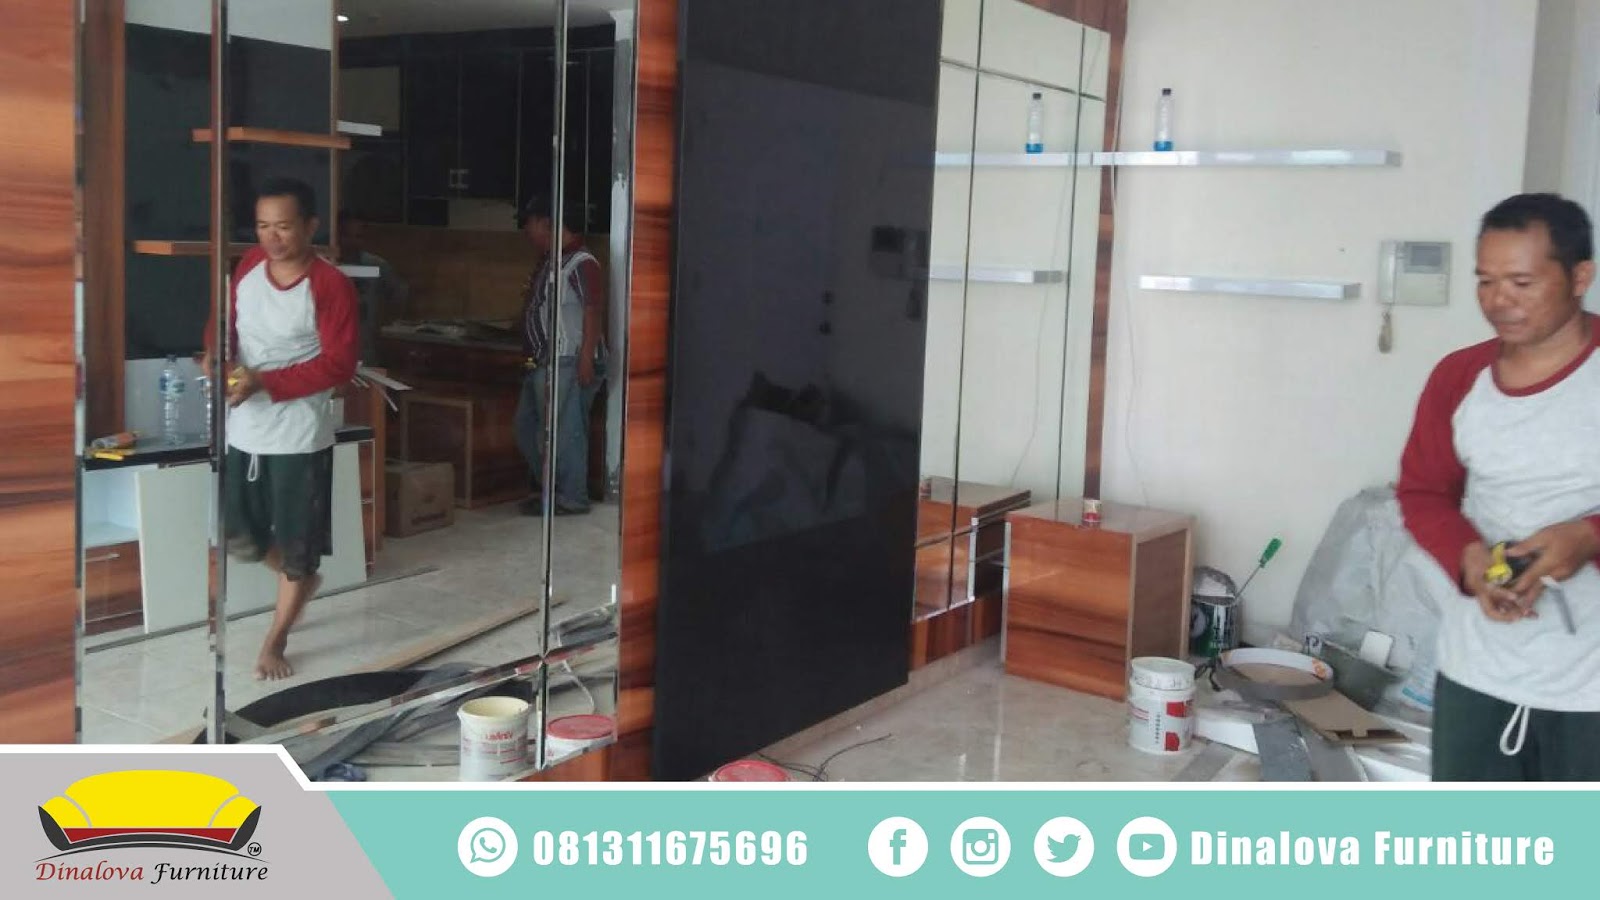 Info Tukang Kayu Mebel Furniture Interior Jakarta